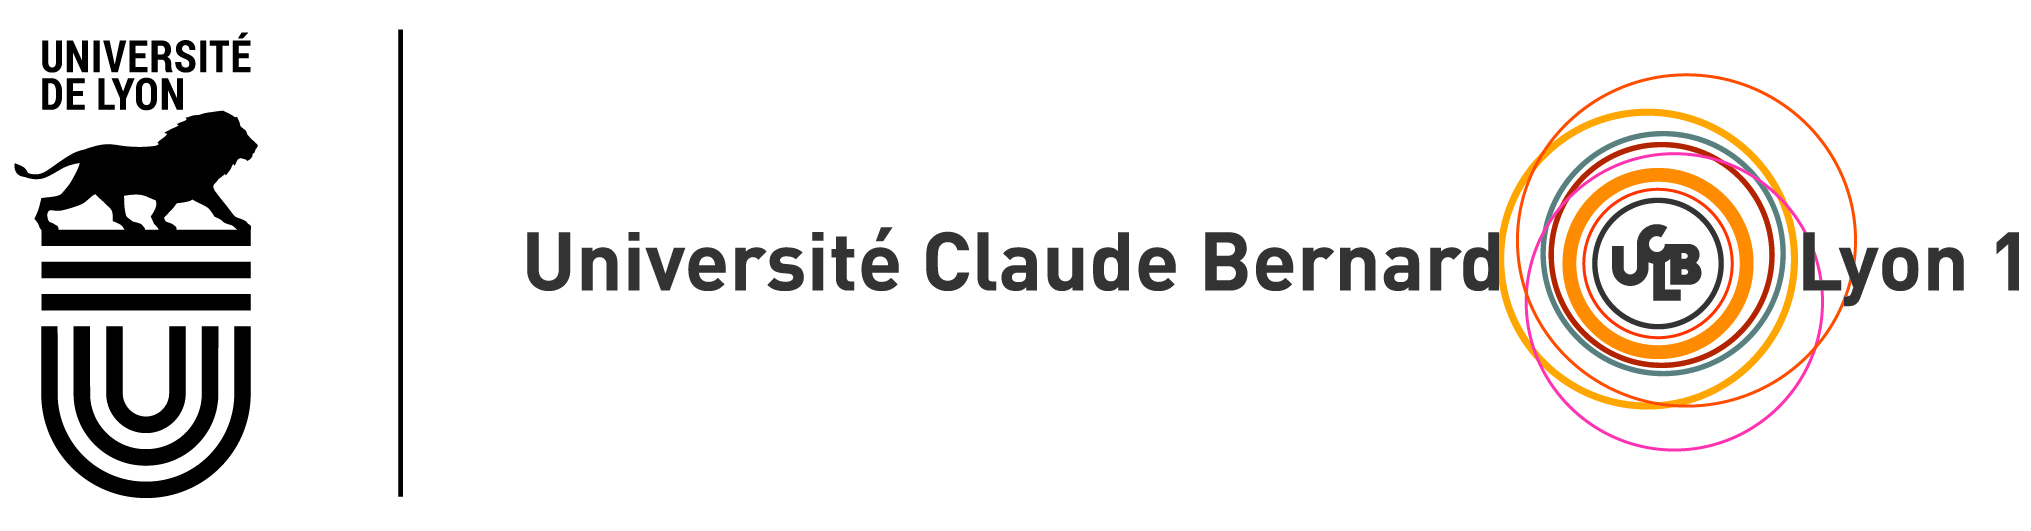 Université Claude Bernard - Lyon 1